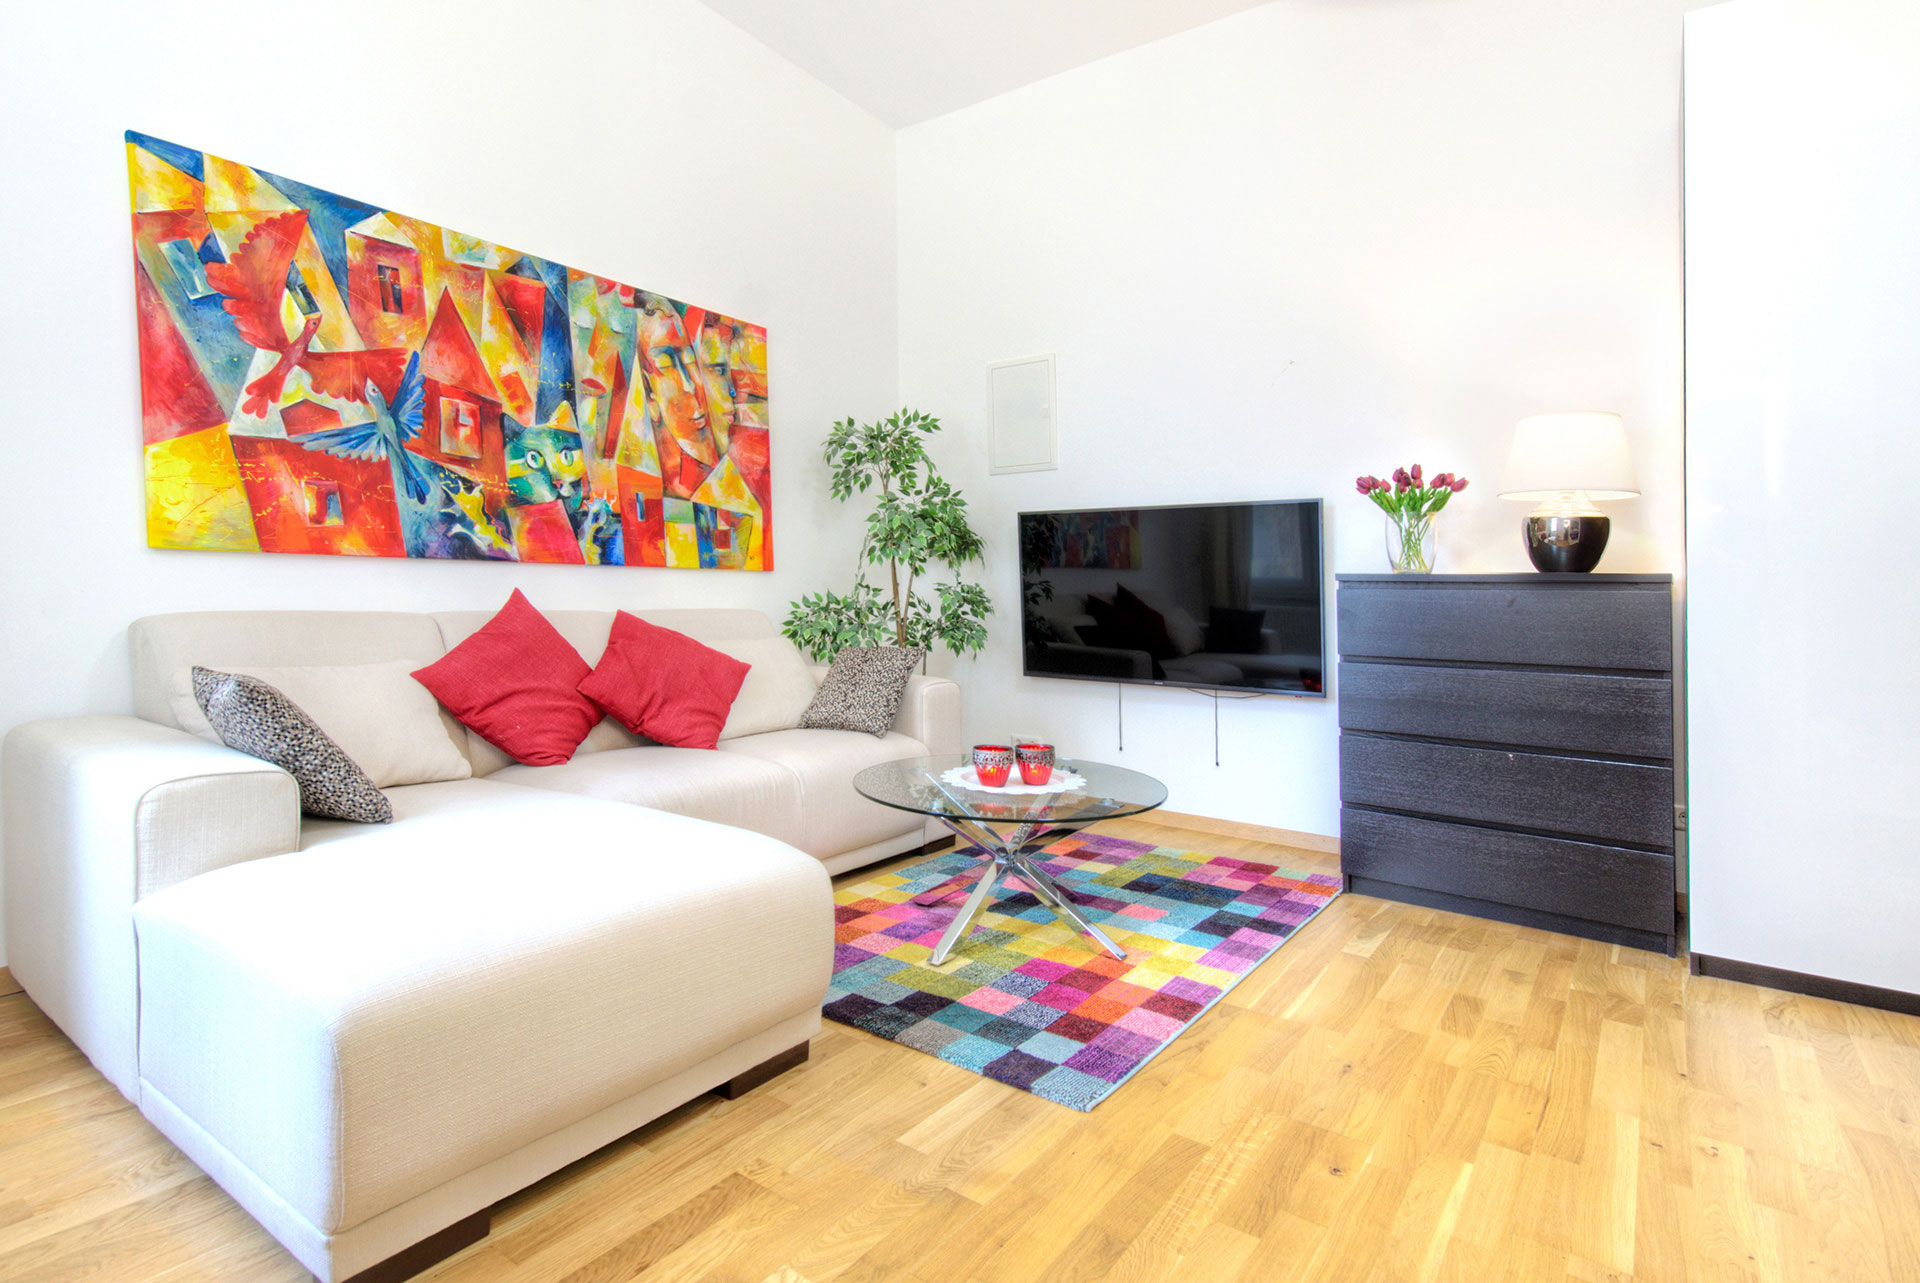 foto-apartment-wohnraum-sofa-rote-kissen-buntes-bild